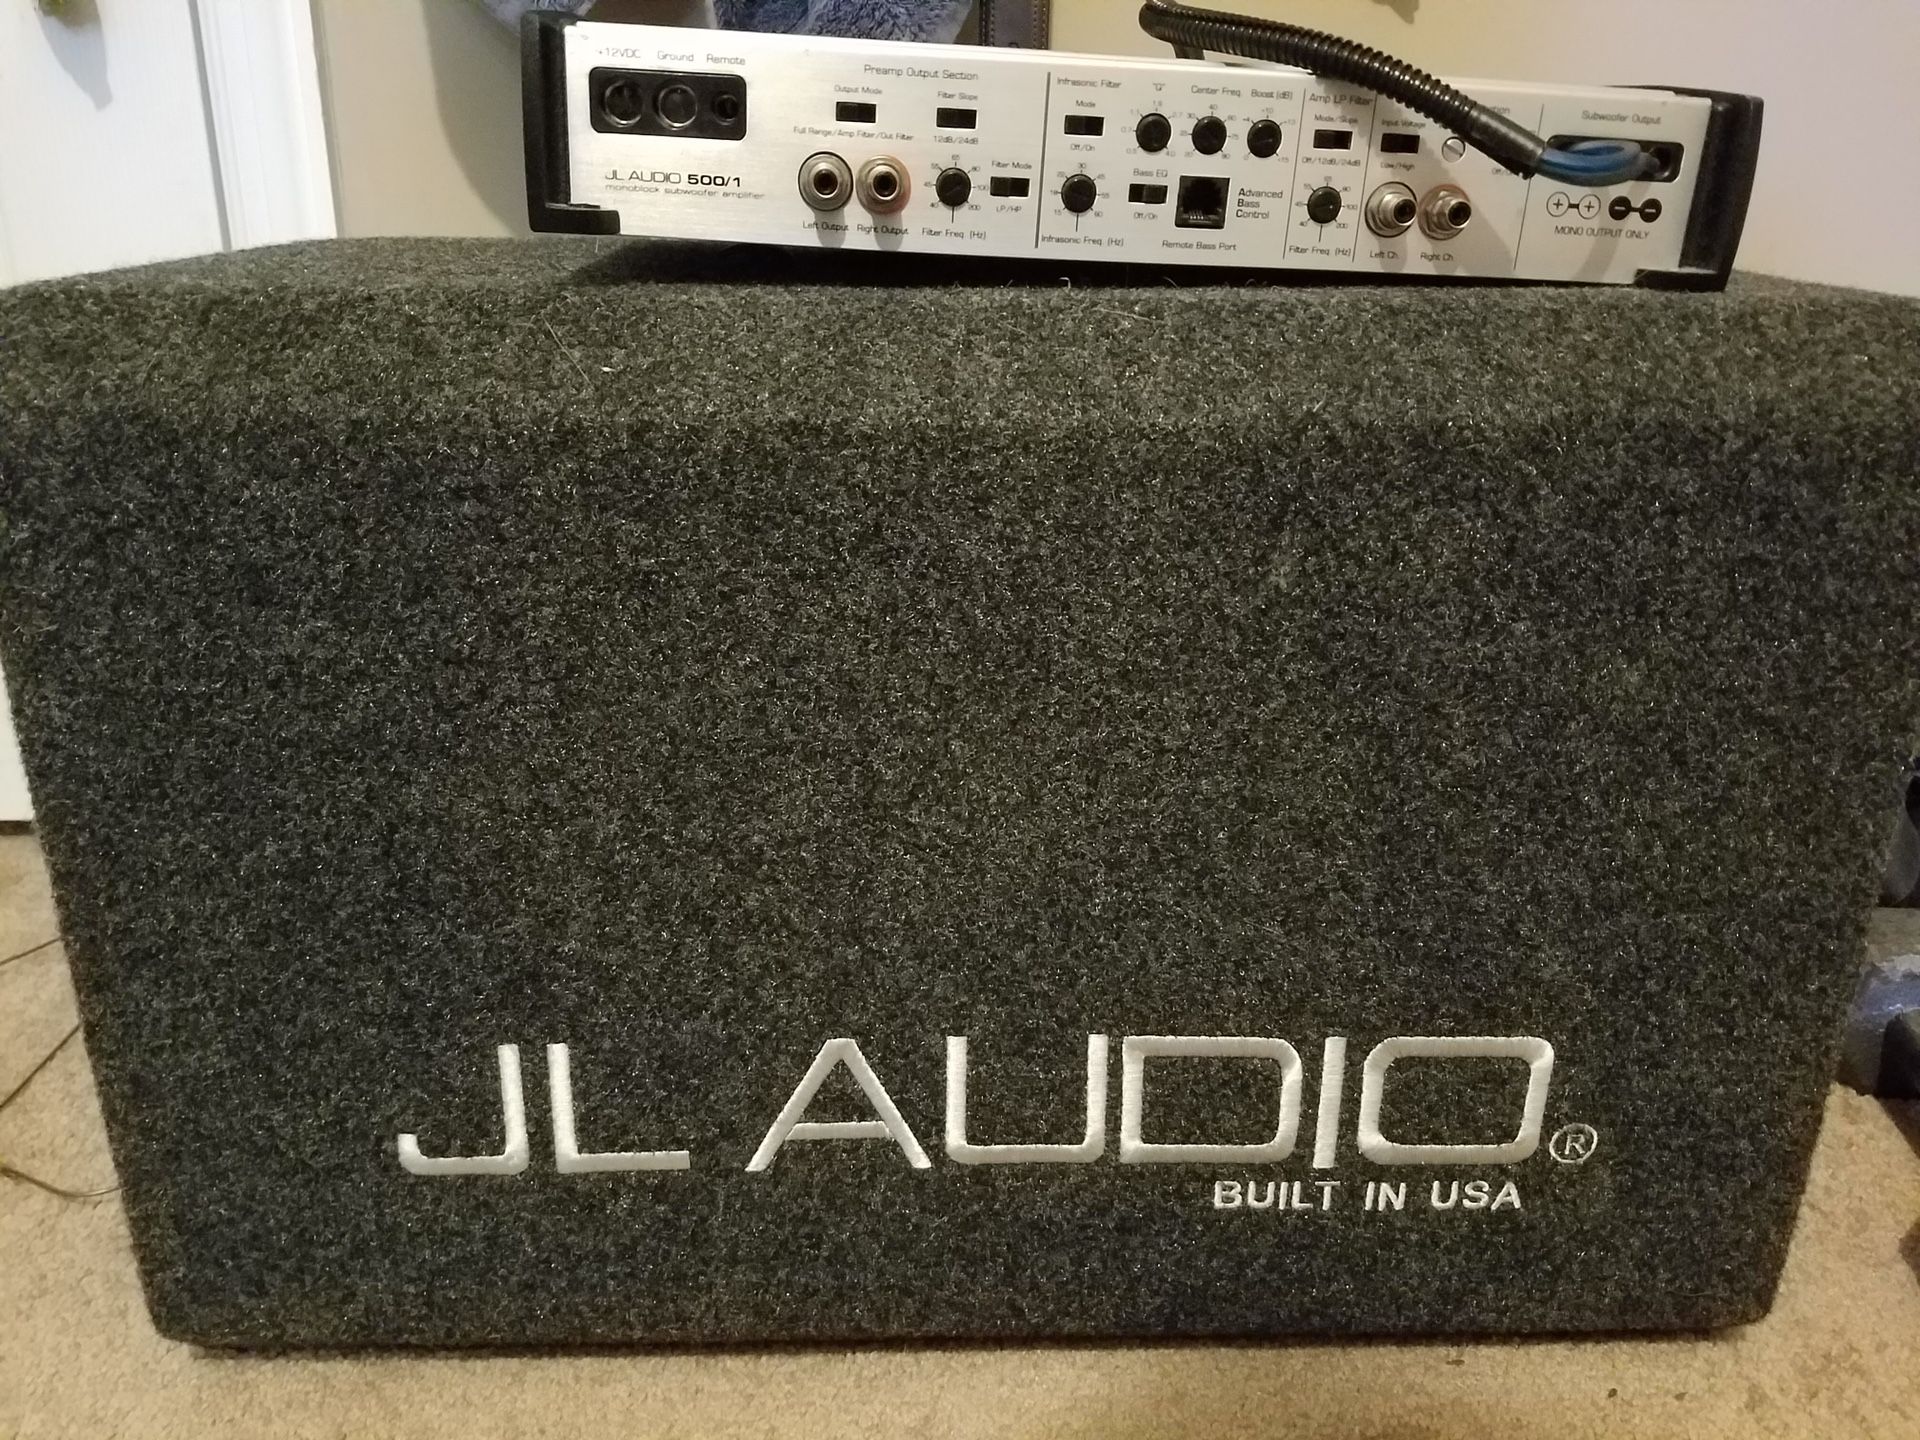 JL Audio 10 inch W6 subwoofer and JL Audio amp